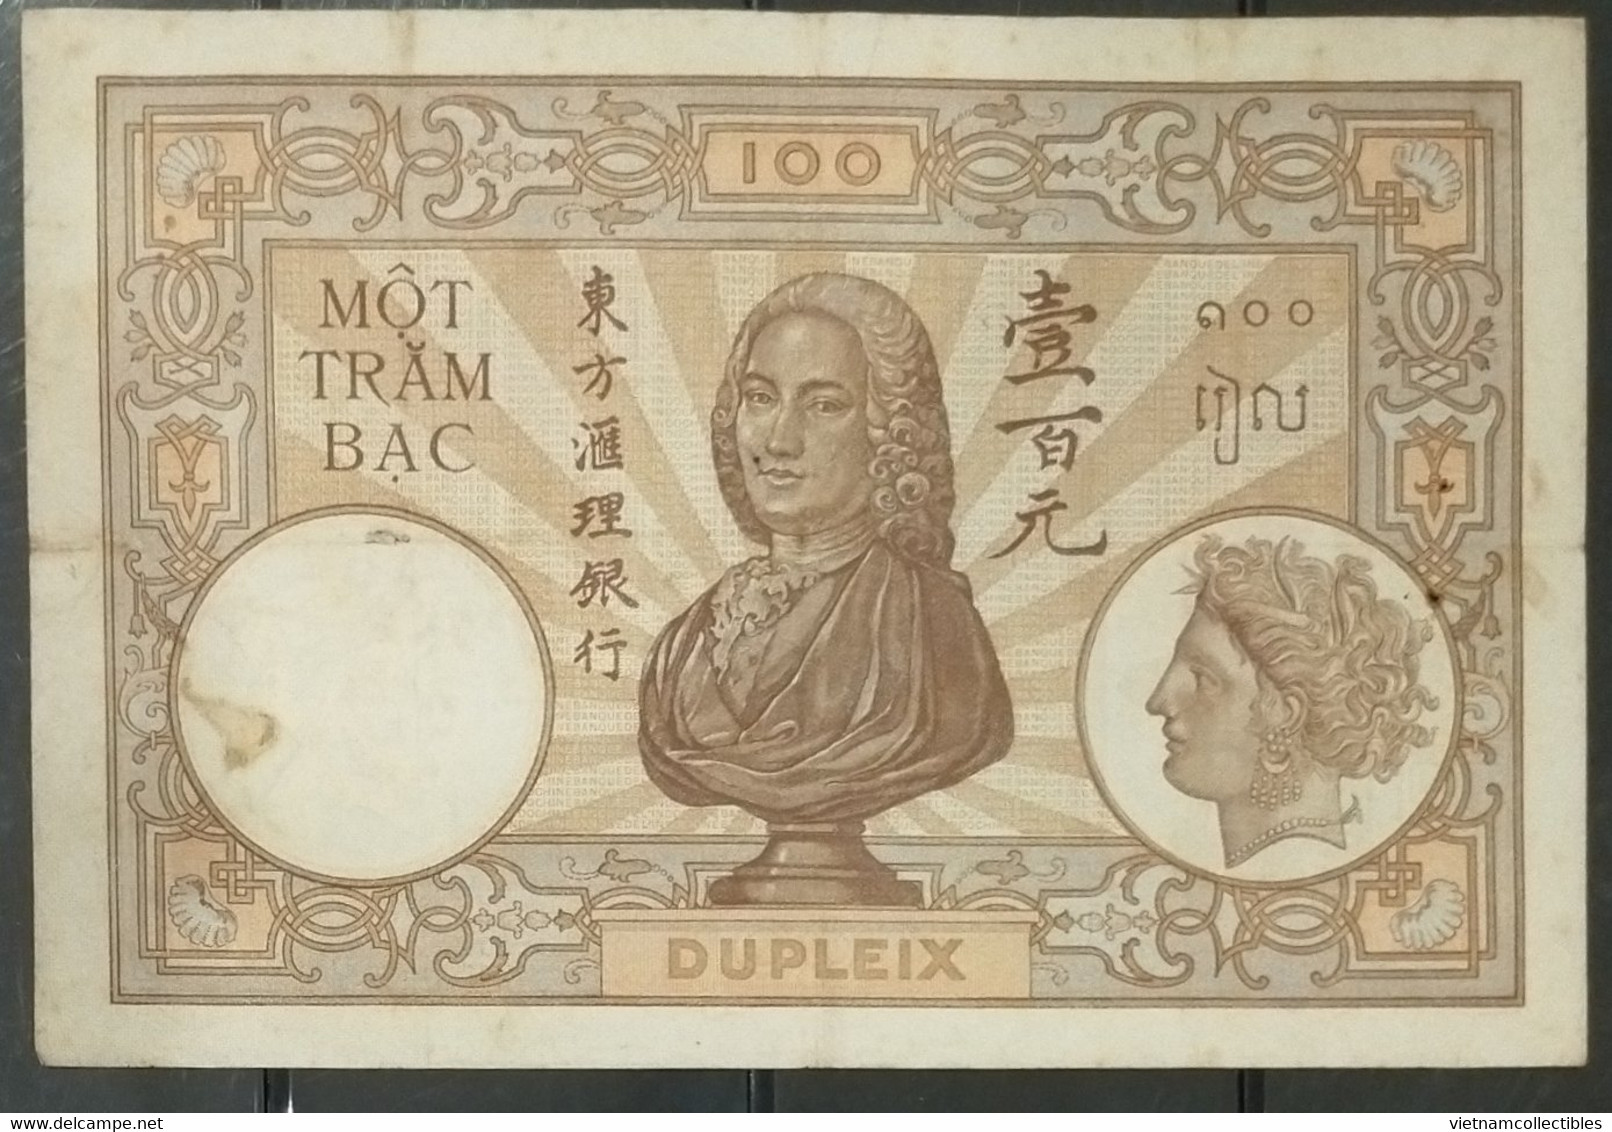 French Indochine Indochina Vietnam Viet Nam Laos Cambodia 100 Piastres VF Banknote Note 1925-39 - Pick # 51d / 02 Photo - Indochine